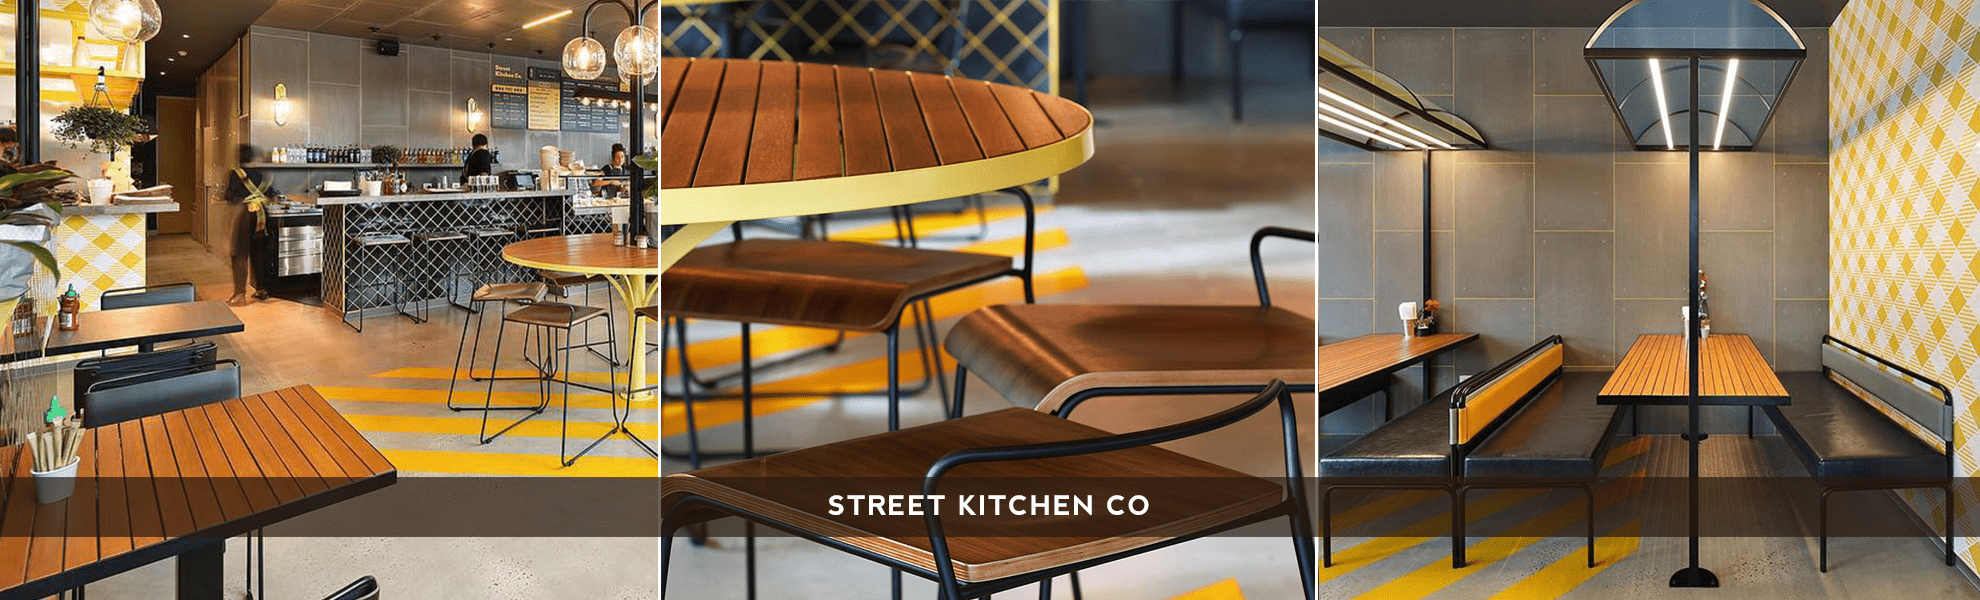 Street Kitchen Co JMH Wholesale Furniture